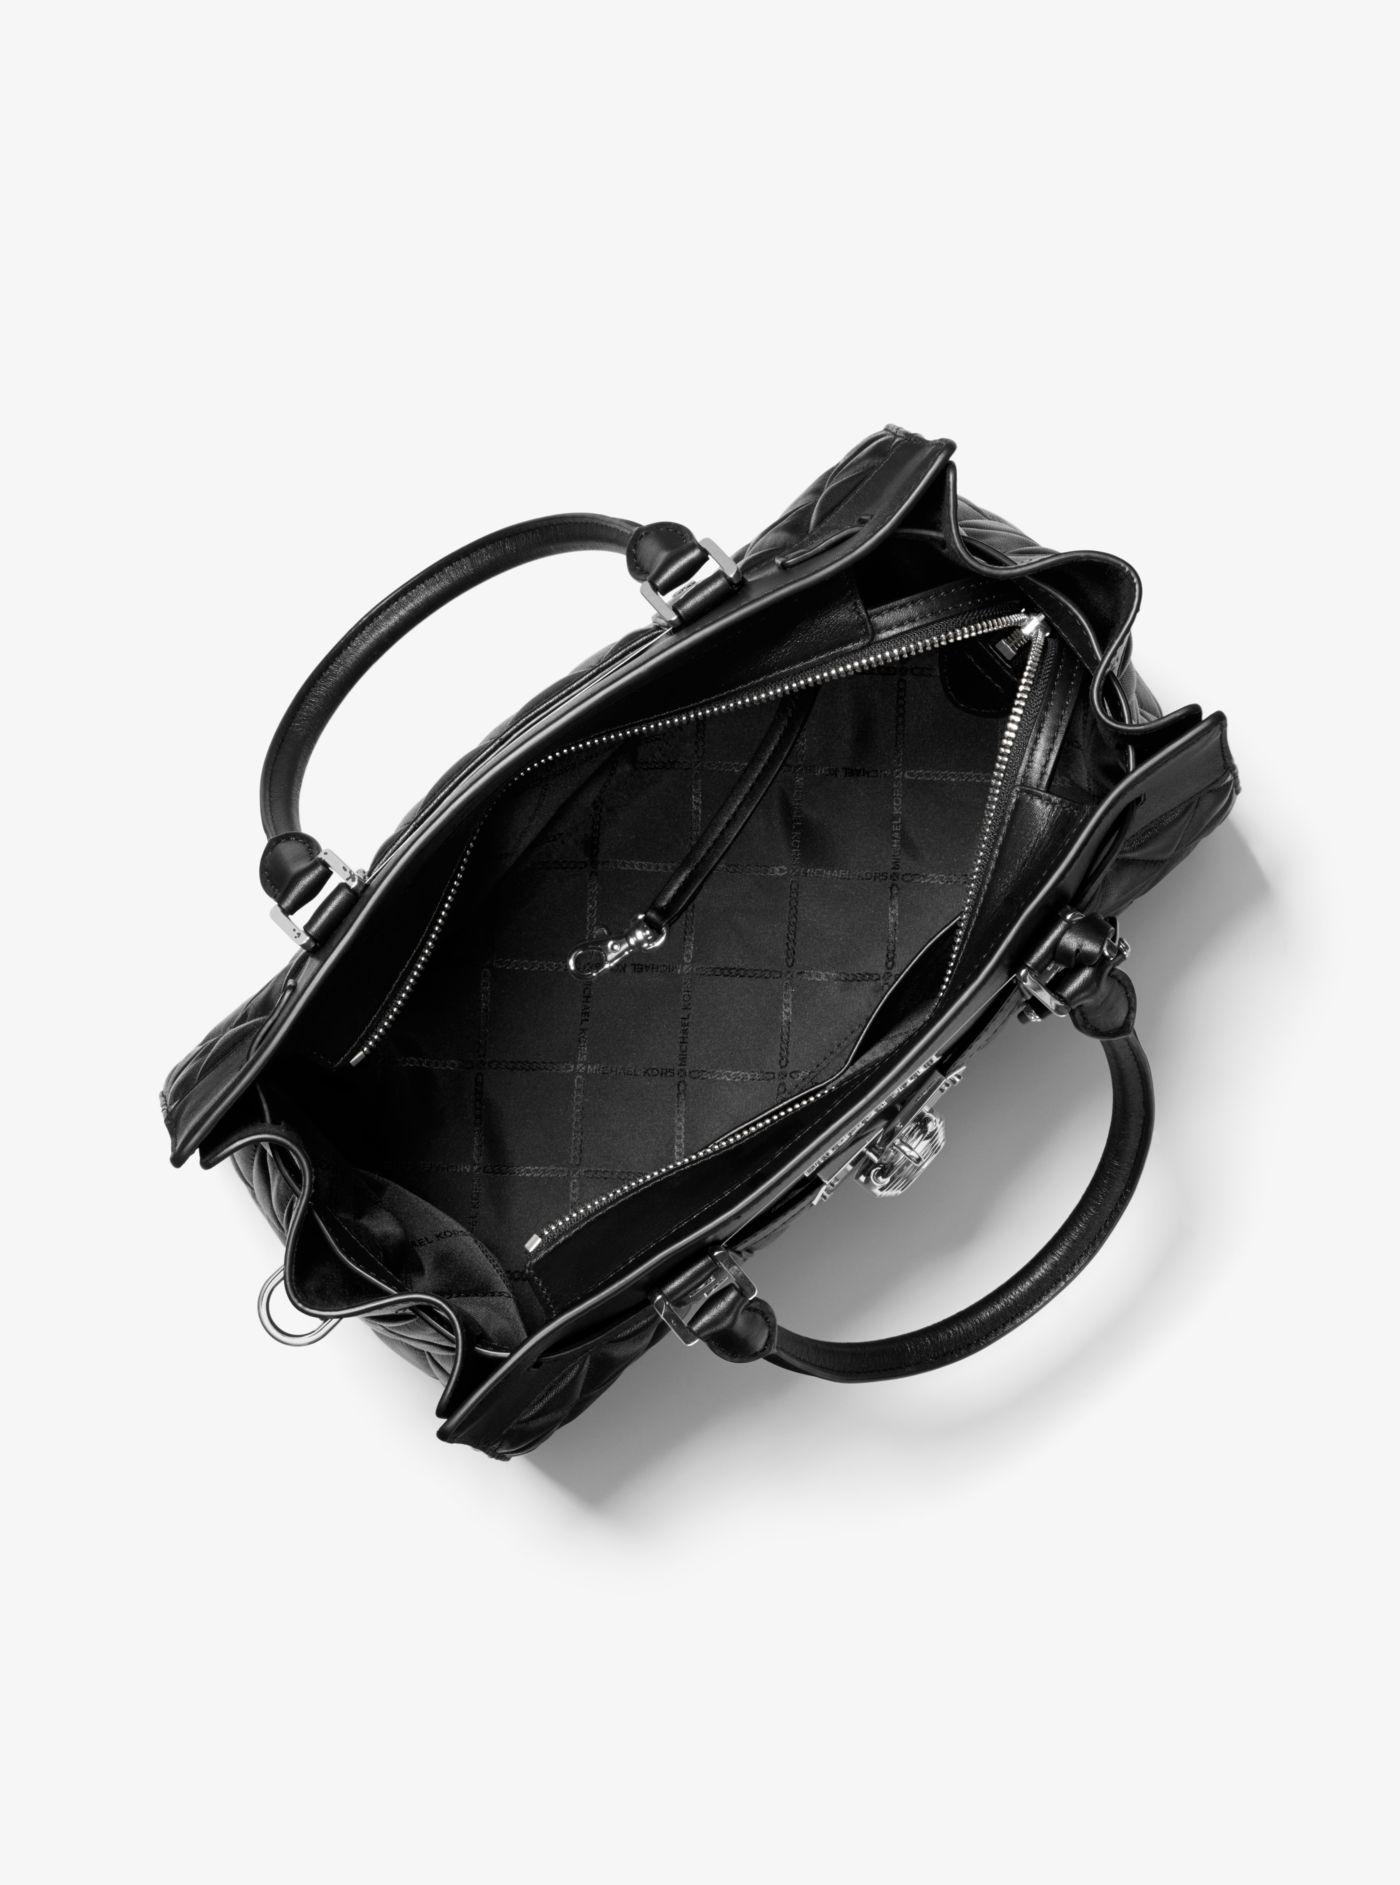 Michael Kors Nouveau Hamilton Large Quilted Leather Satchel in Black | Lyst